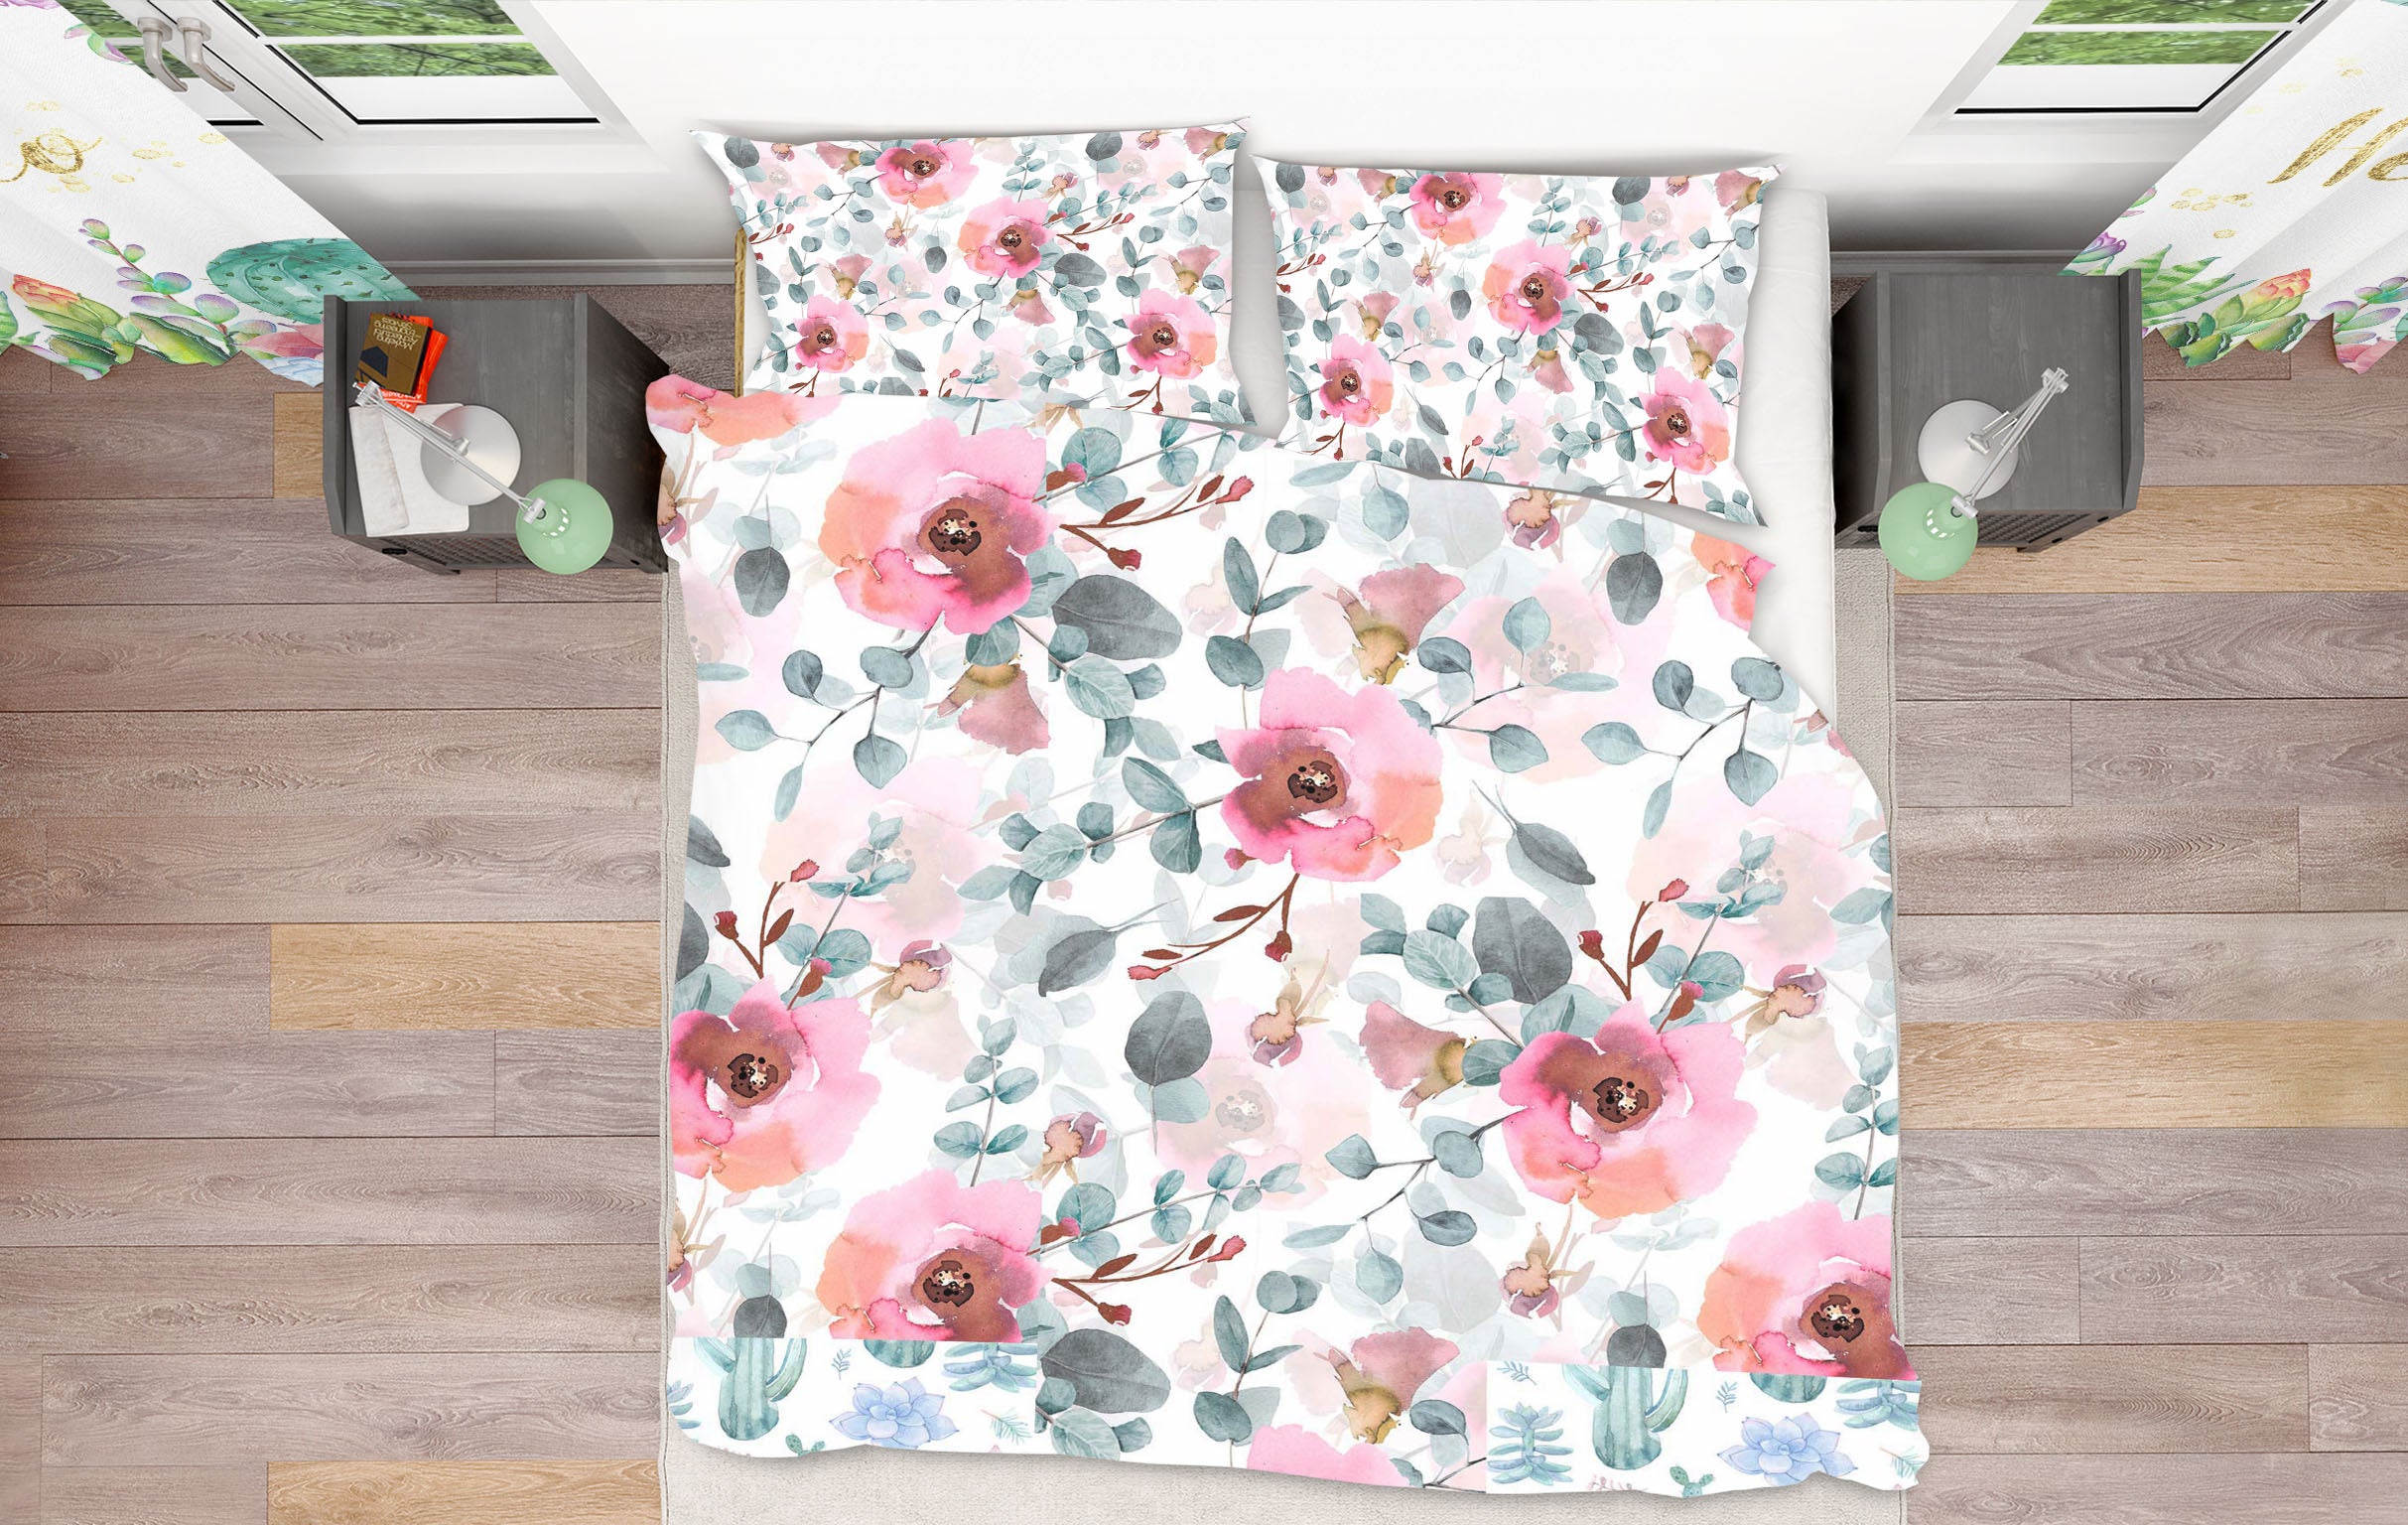 3D Leaves Flower 086 Uta Naumann Bedding Bed Pillowcases Quilt